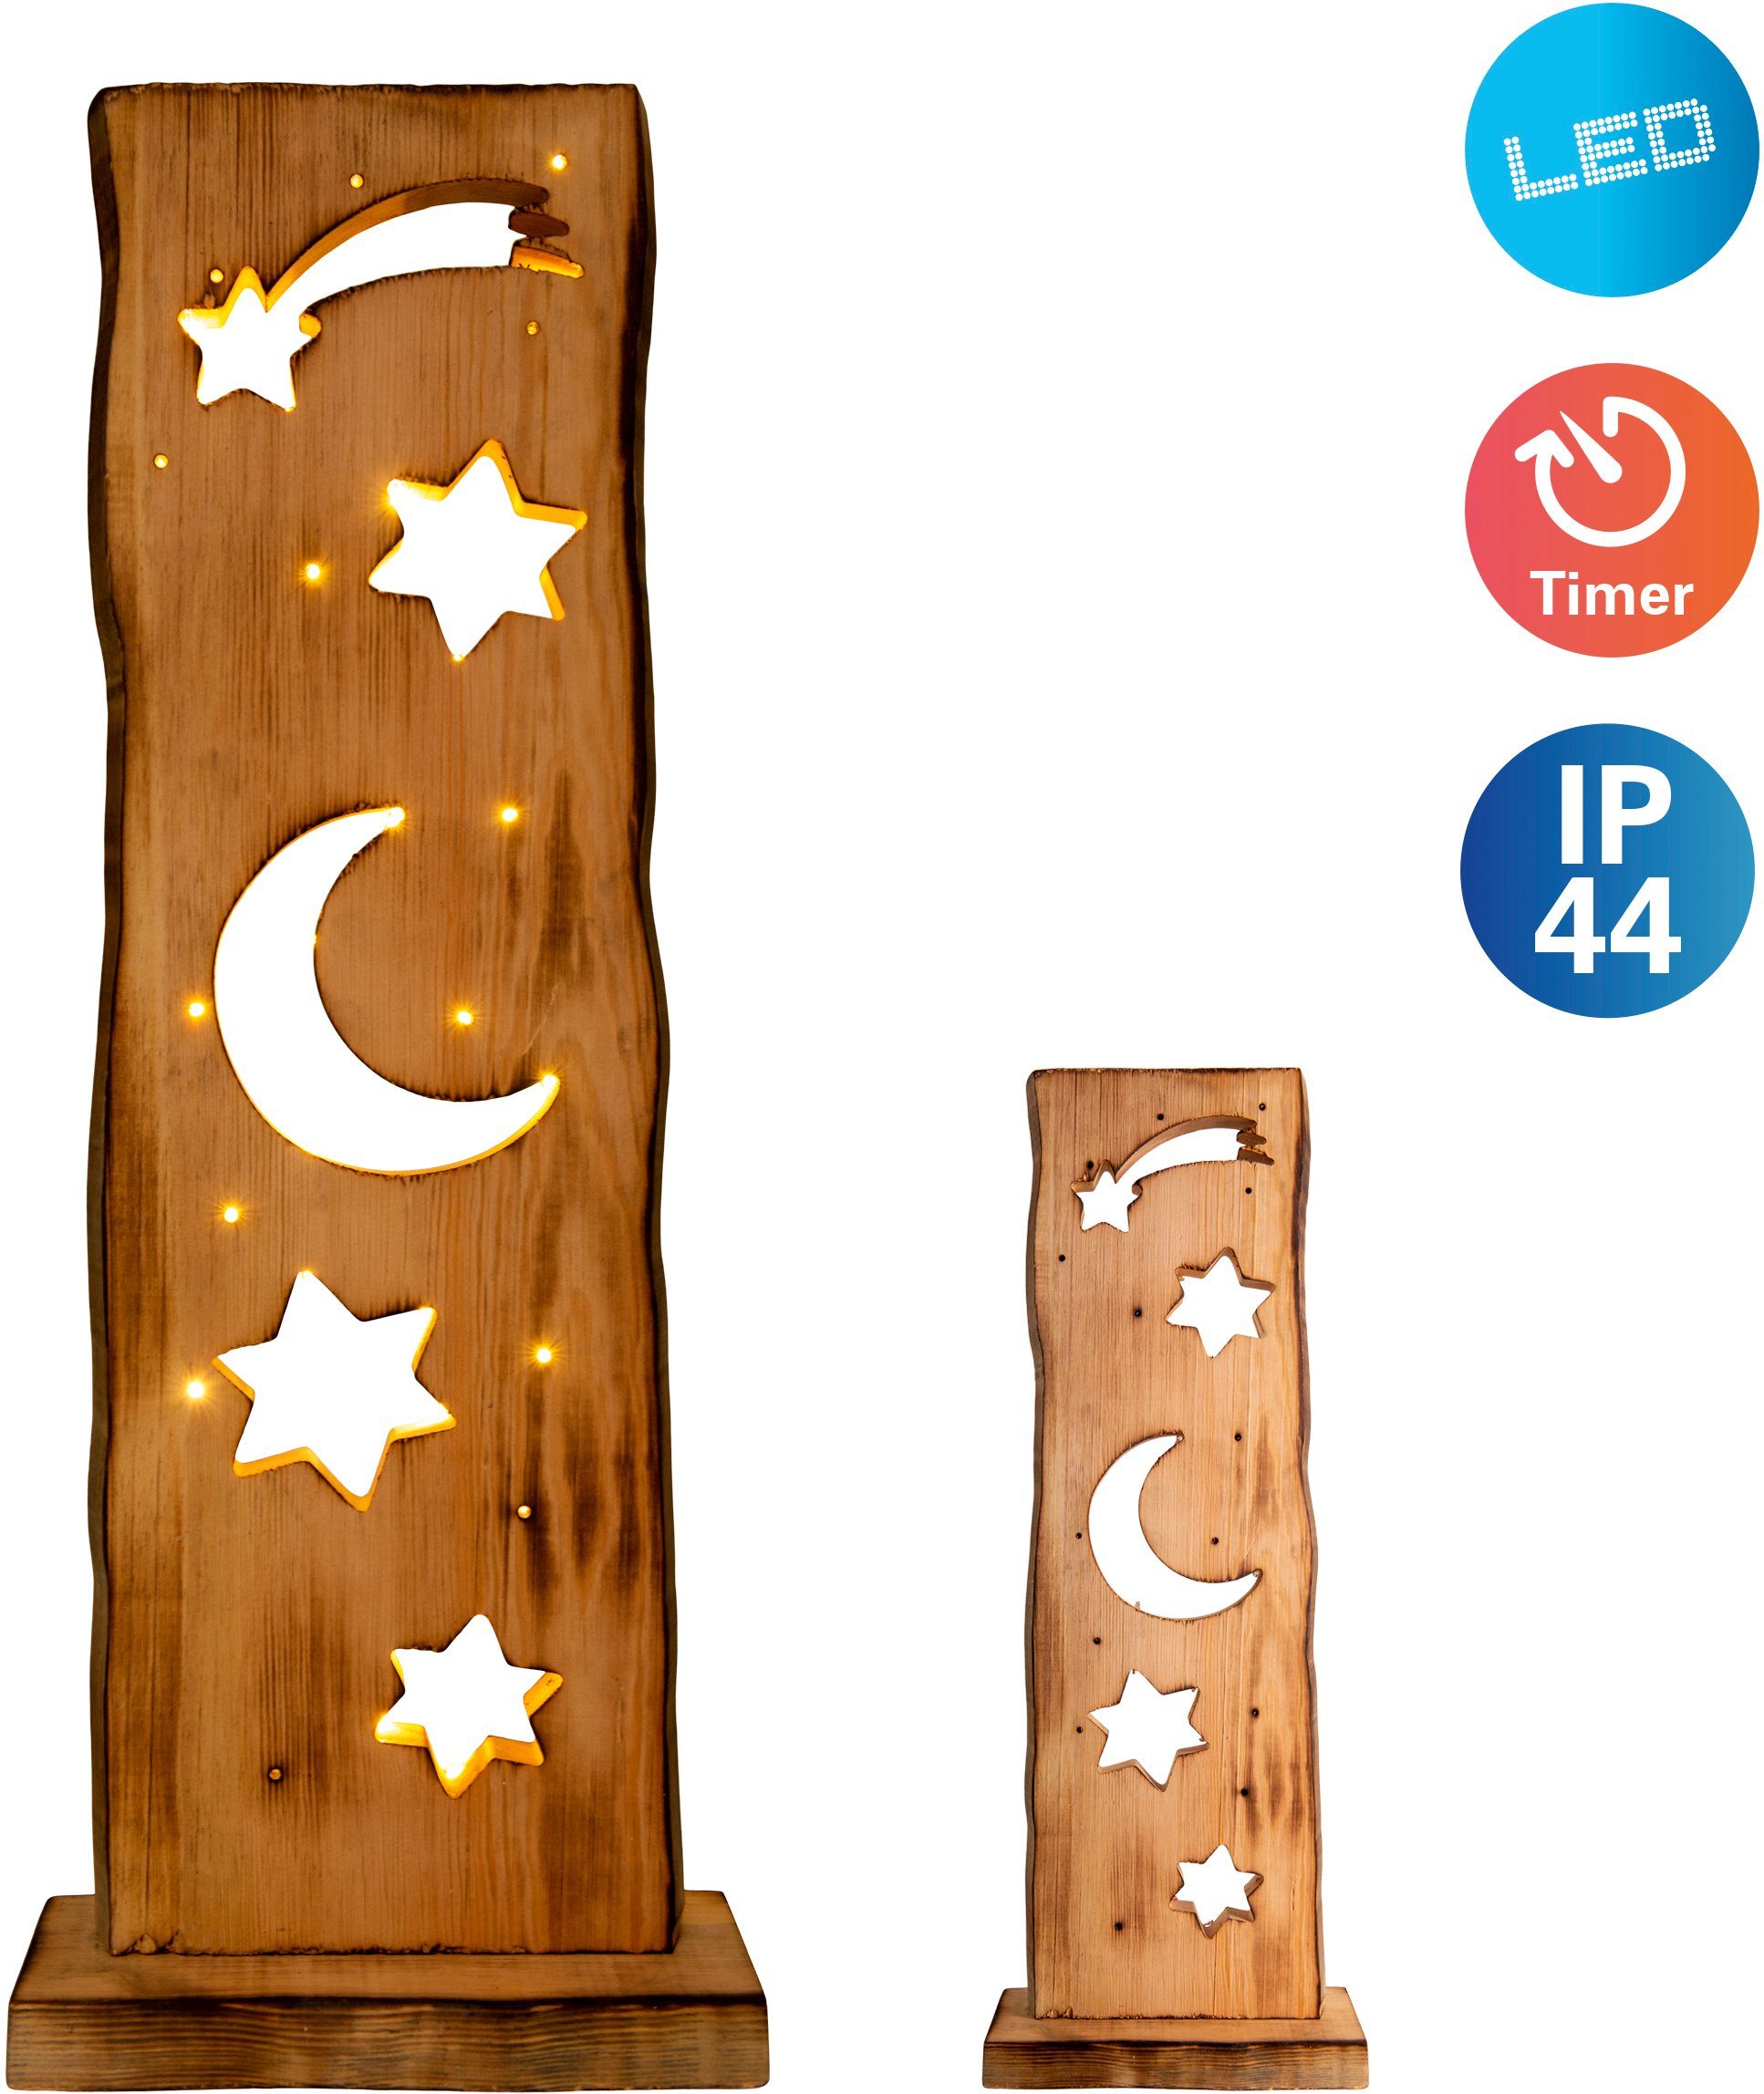 näve LED Dekoobjekt Light Moon/Stars, Ein-/Ausschalter, LED fest integriert, Warmweiß, Für Aussenbereich geeignet, incl. Timer (6h an und 18h aus), aus Holz | Leuchtfiguren